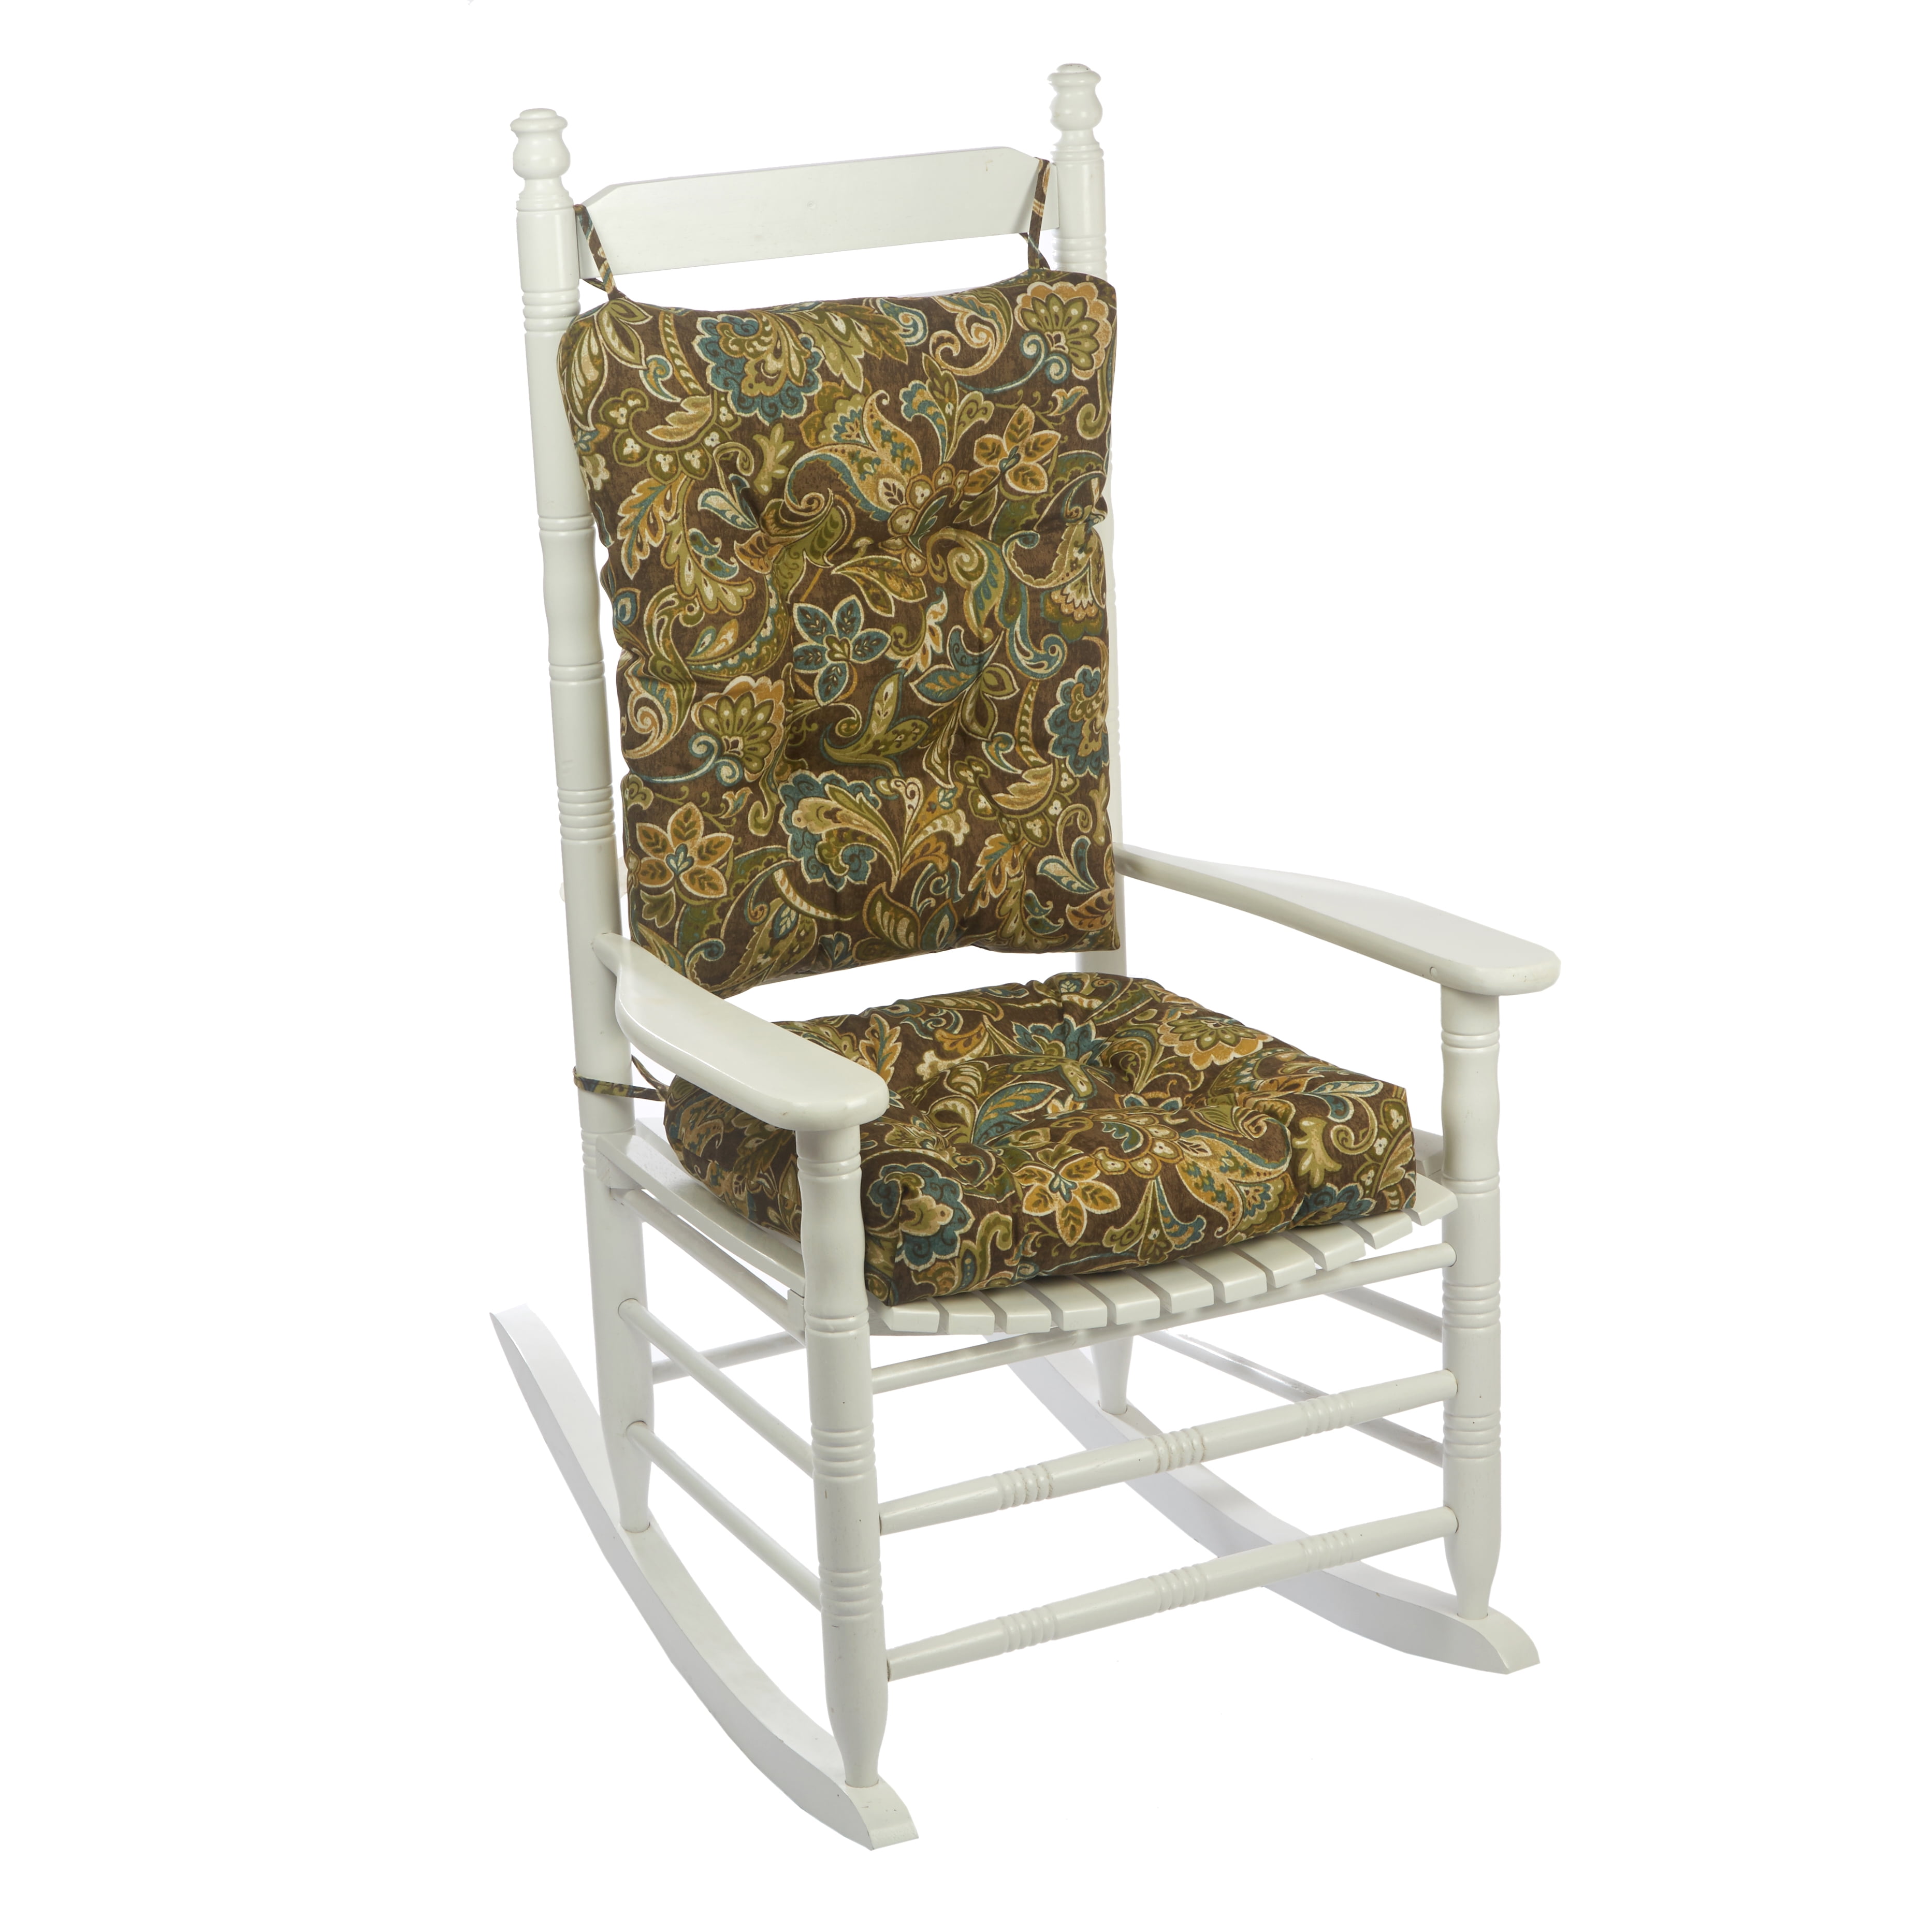 Fl Rocking Chair Cushion Set, Outdoor Rocking Chair Seat Pads